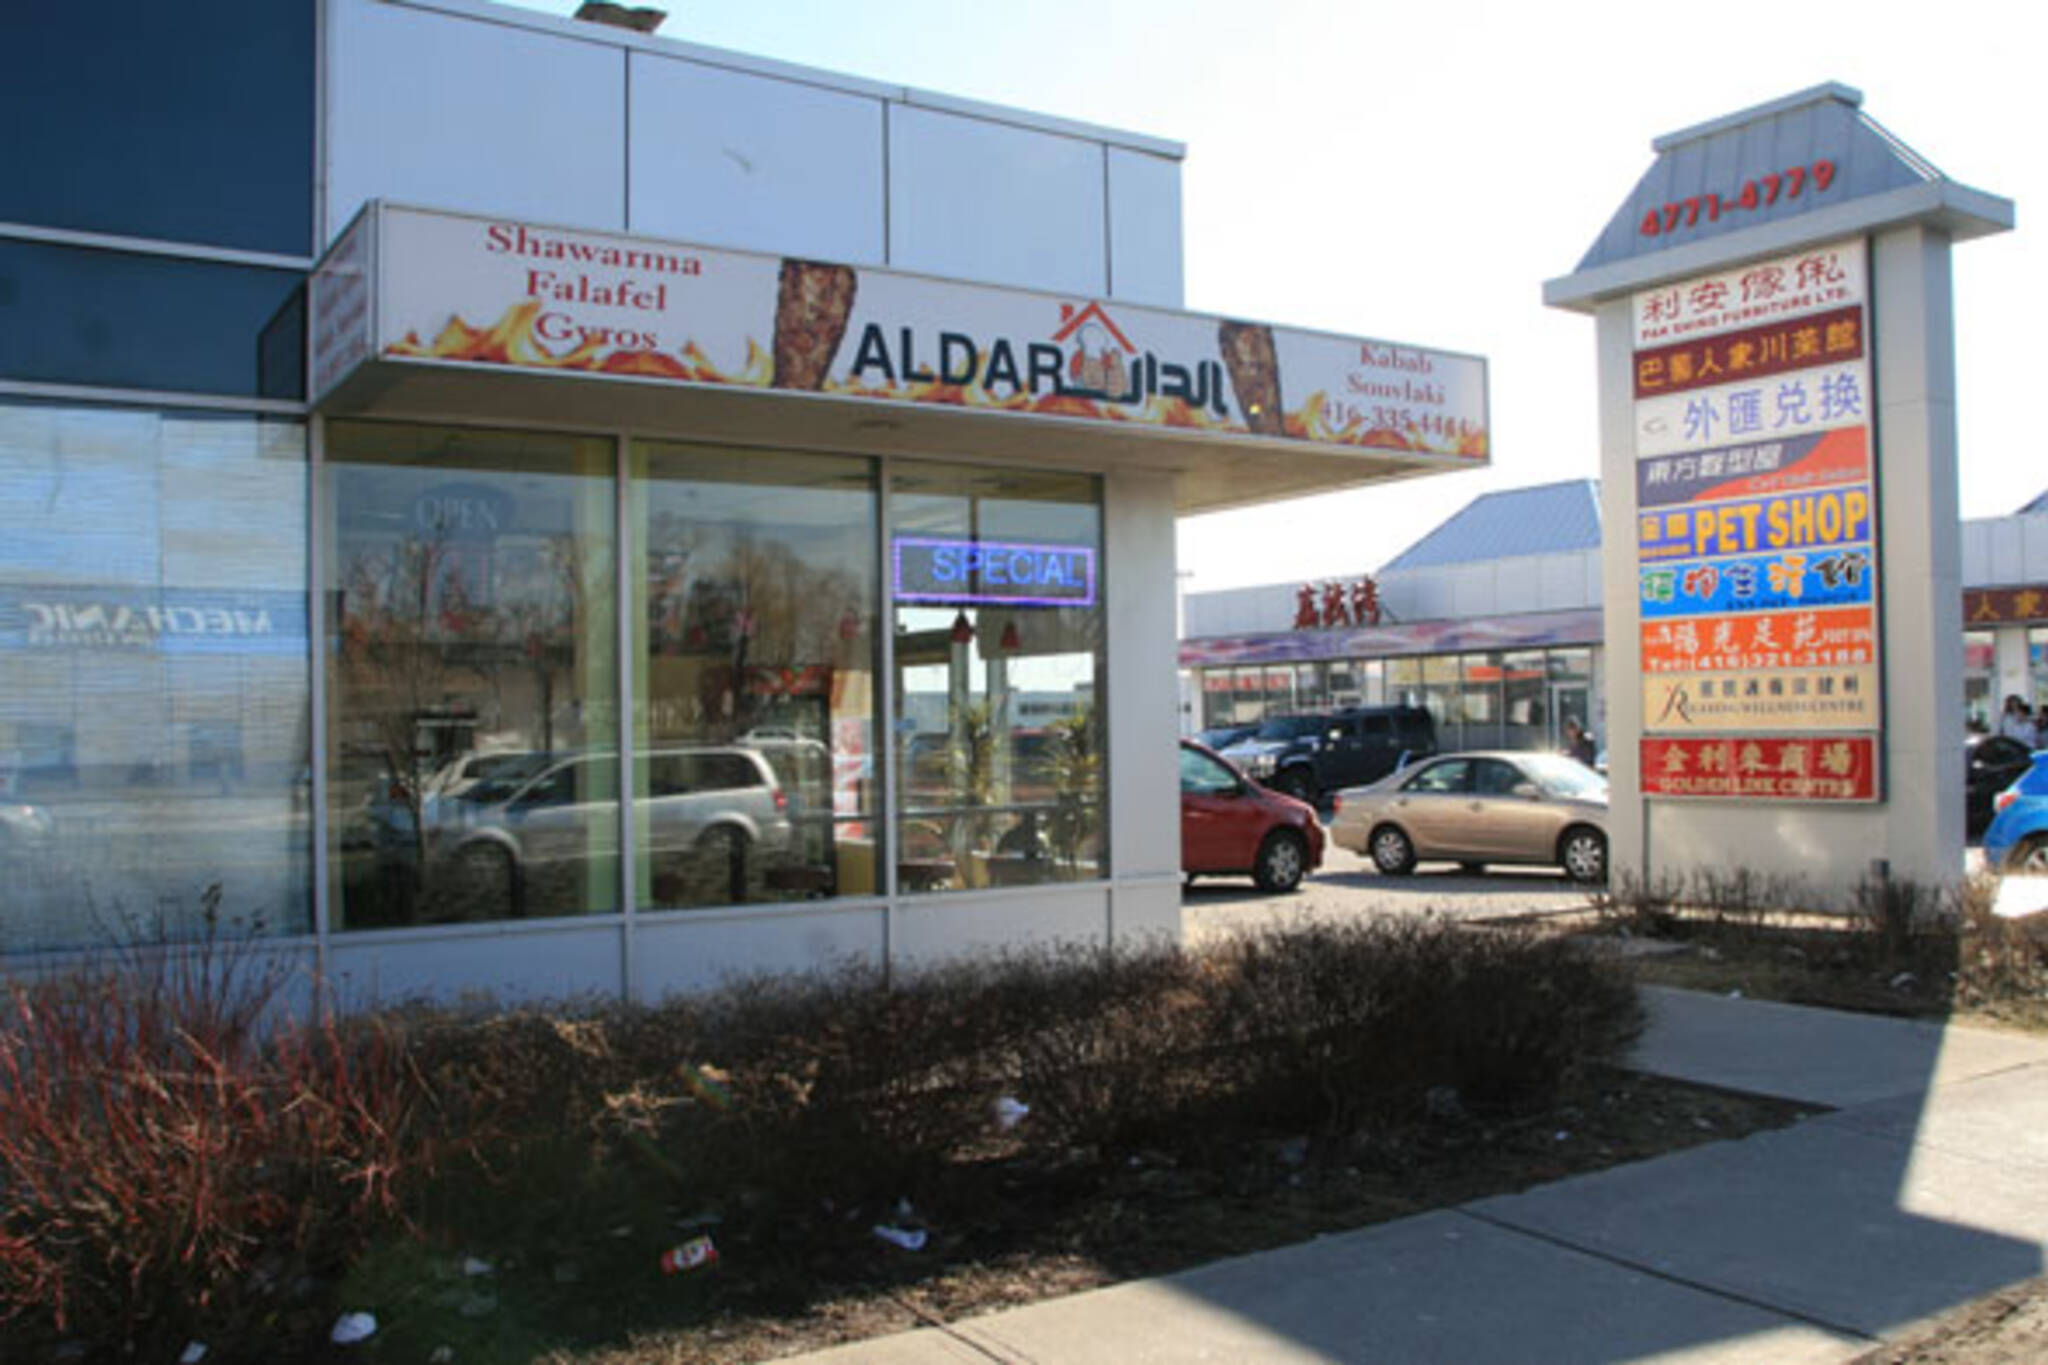 Aldar Shawarma